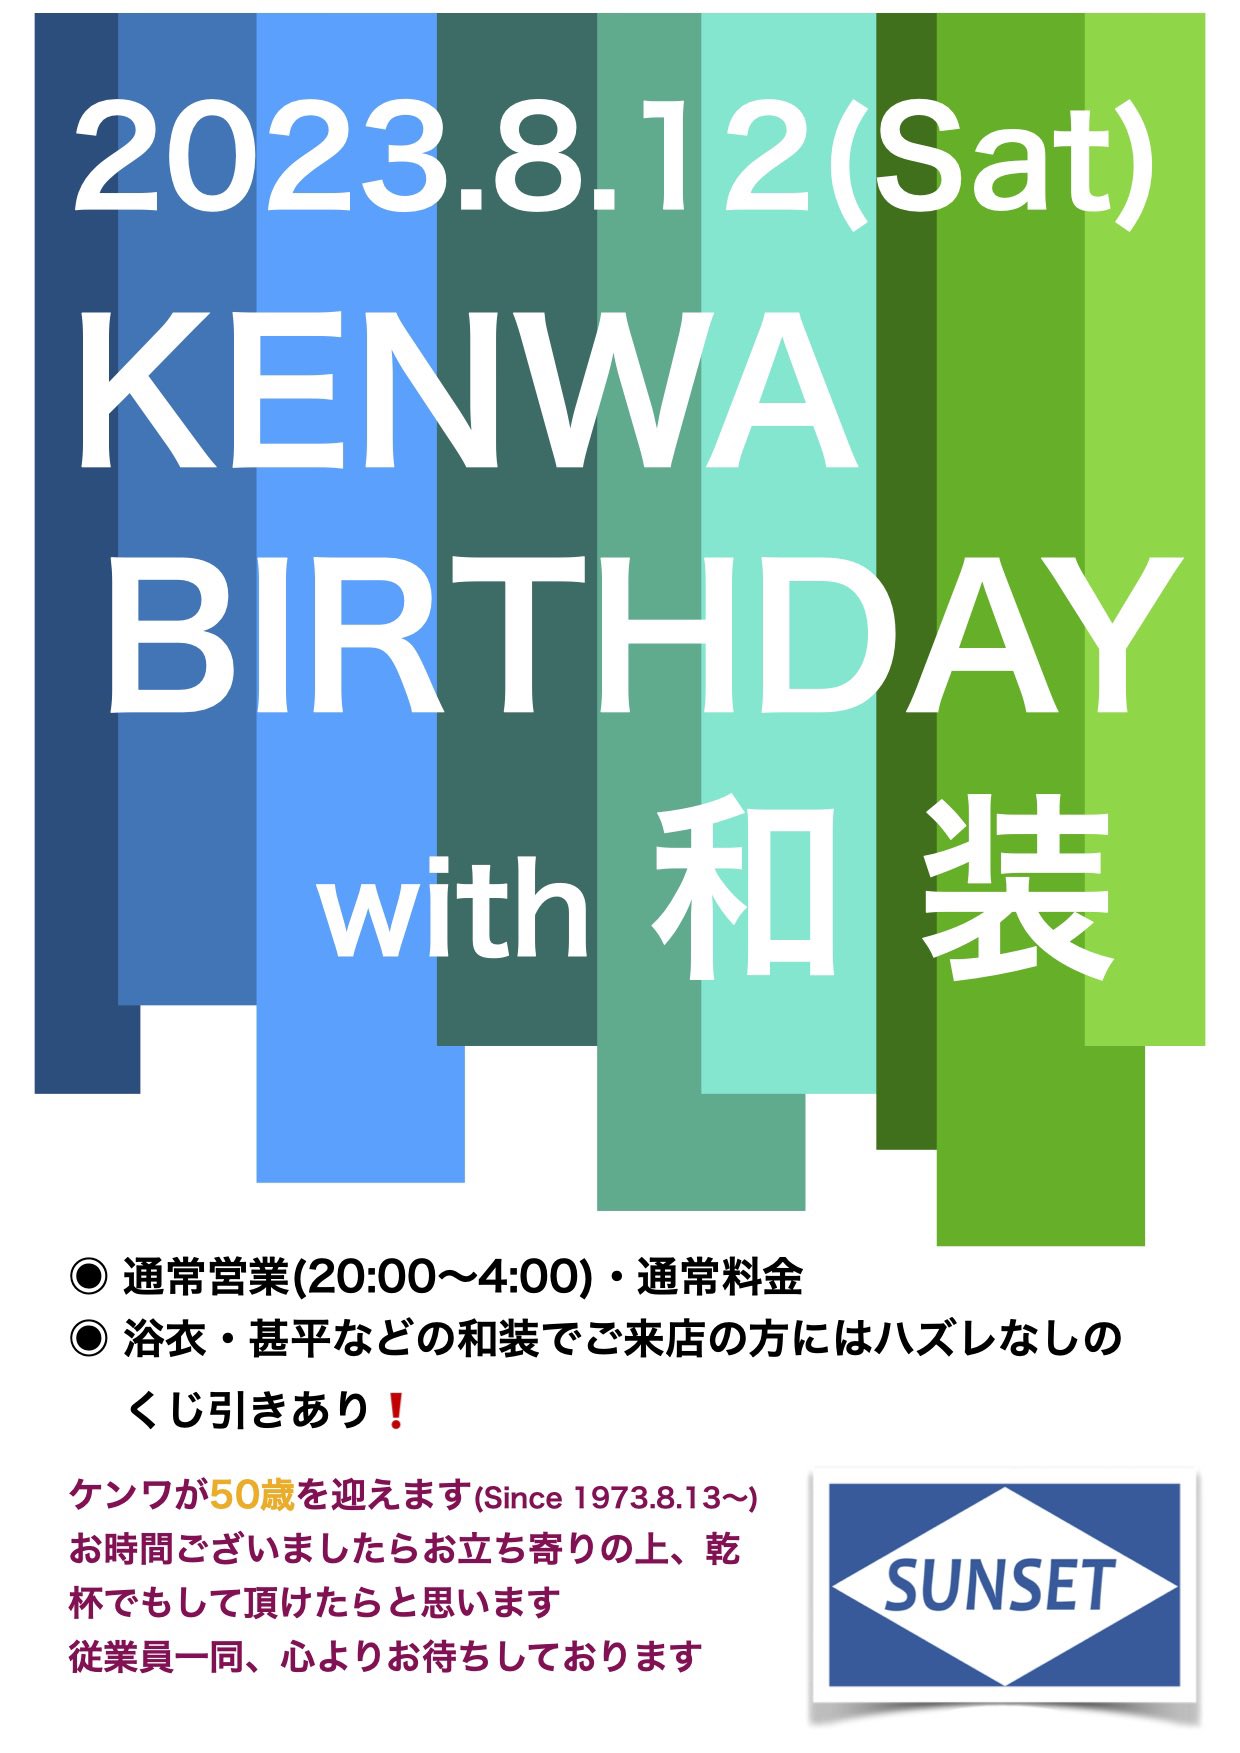 KENWA BIRTHDAY with 和装